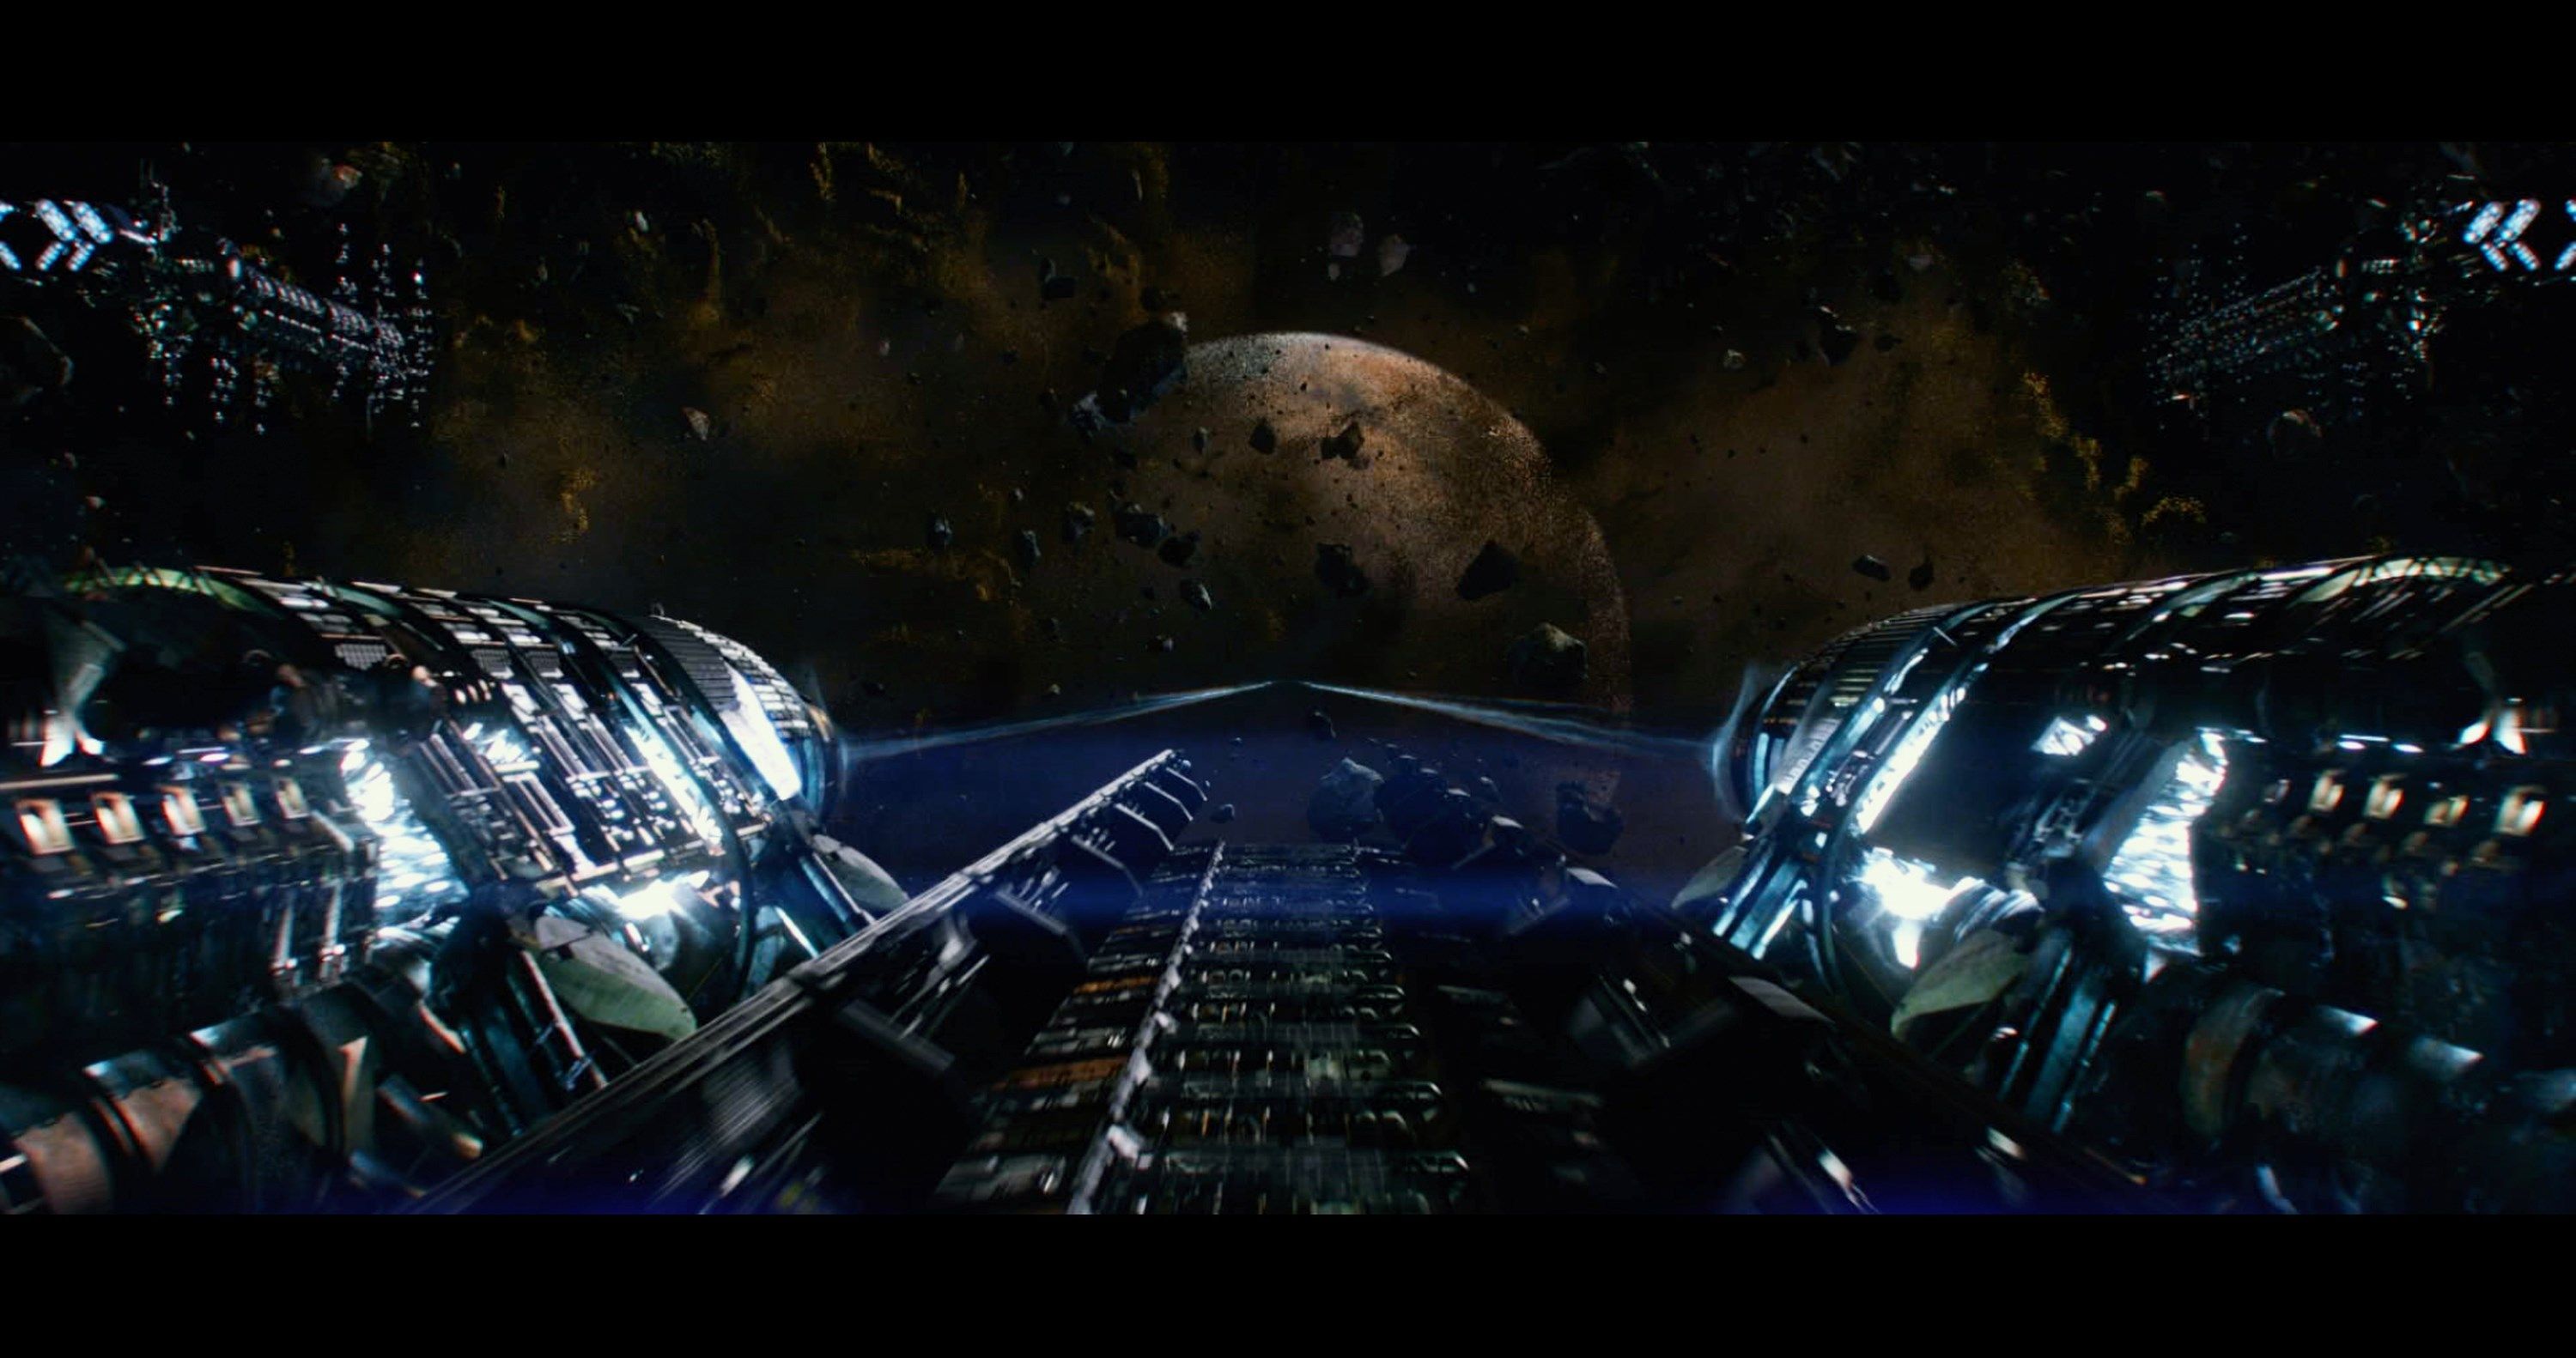 Ender's Game Asa Butterfield, Harrison Ford, and Ben Kingsley |Teaser  Trailer